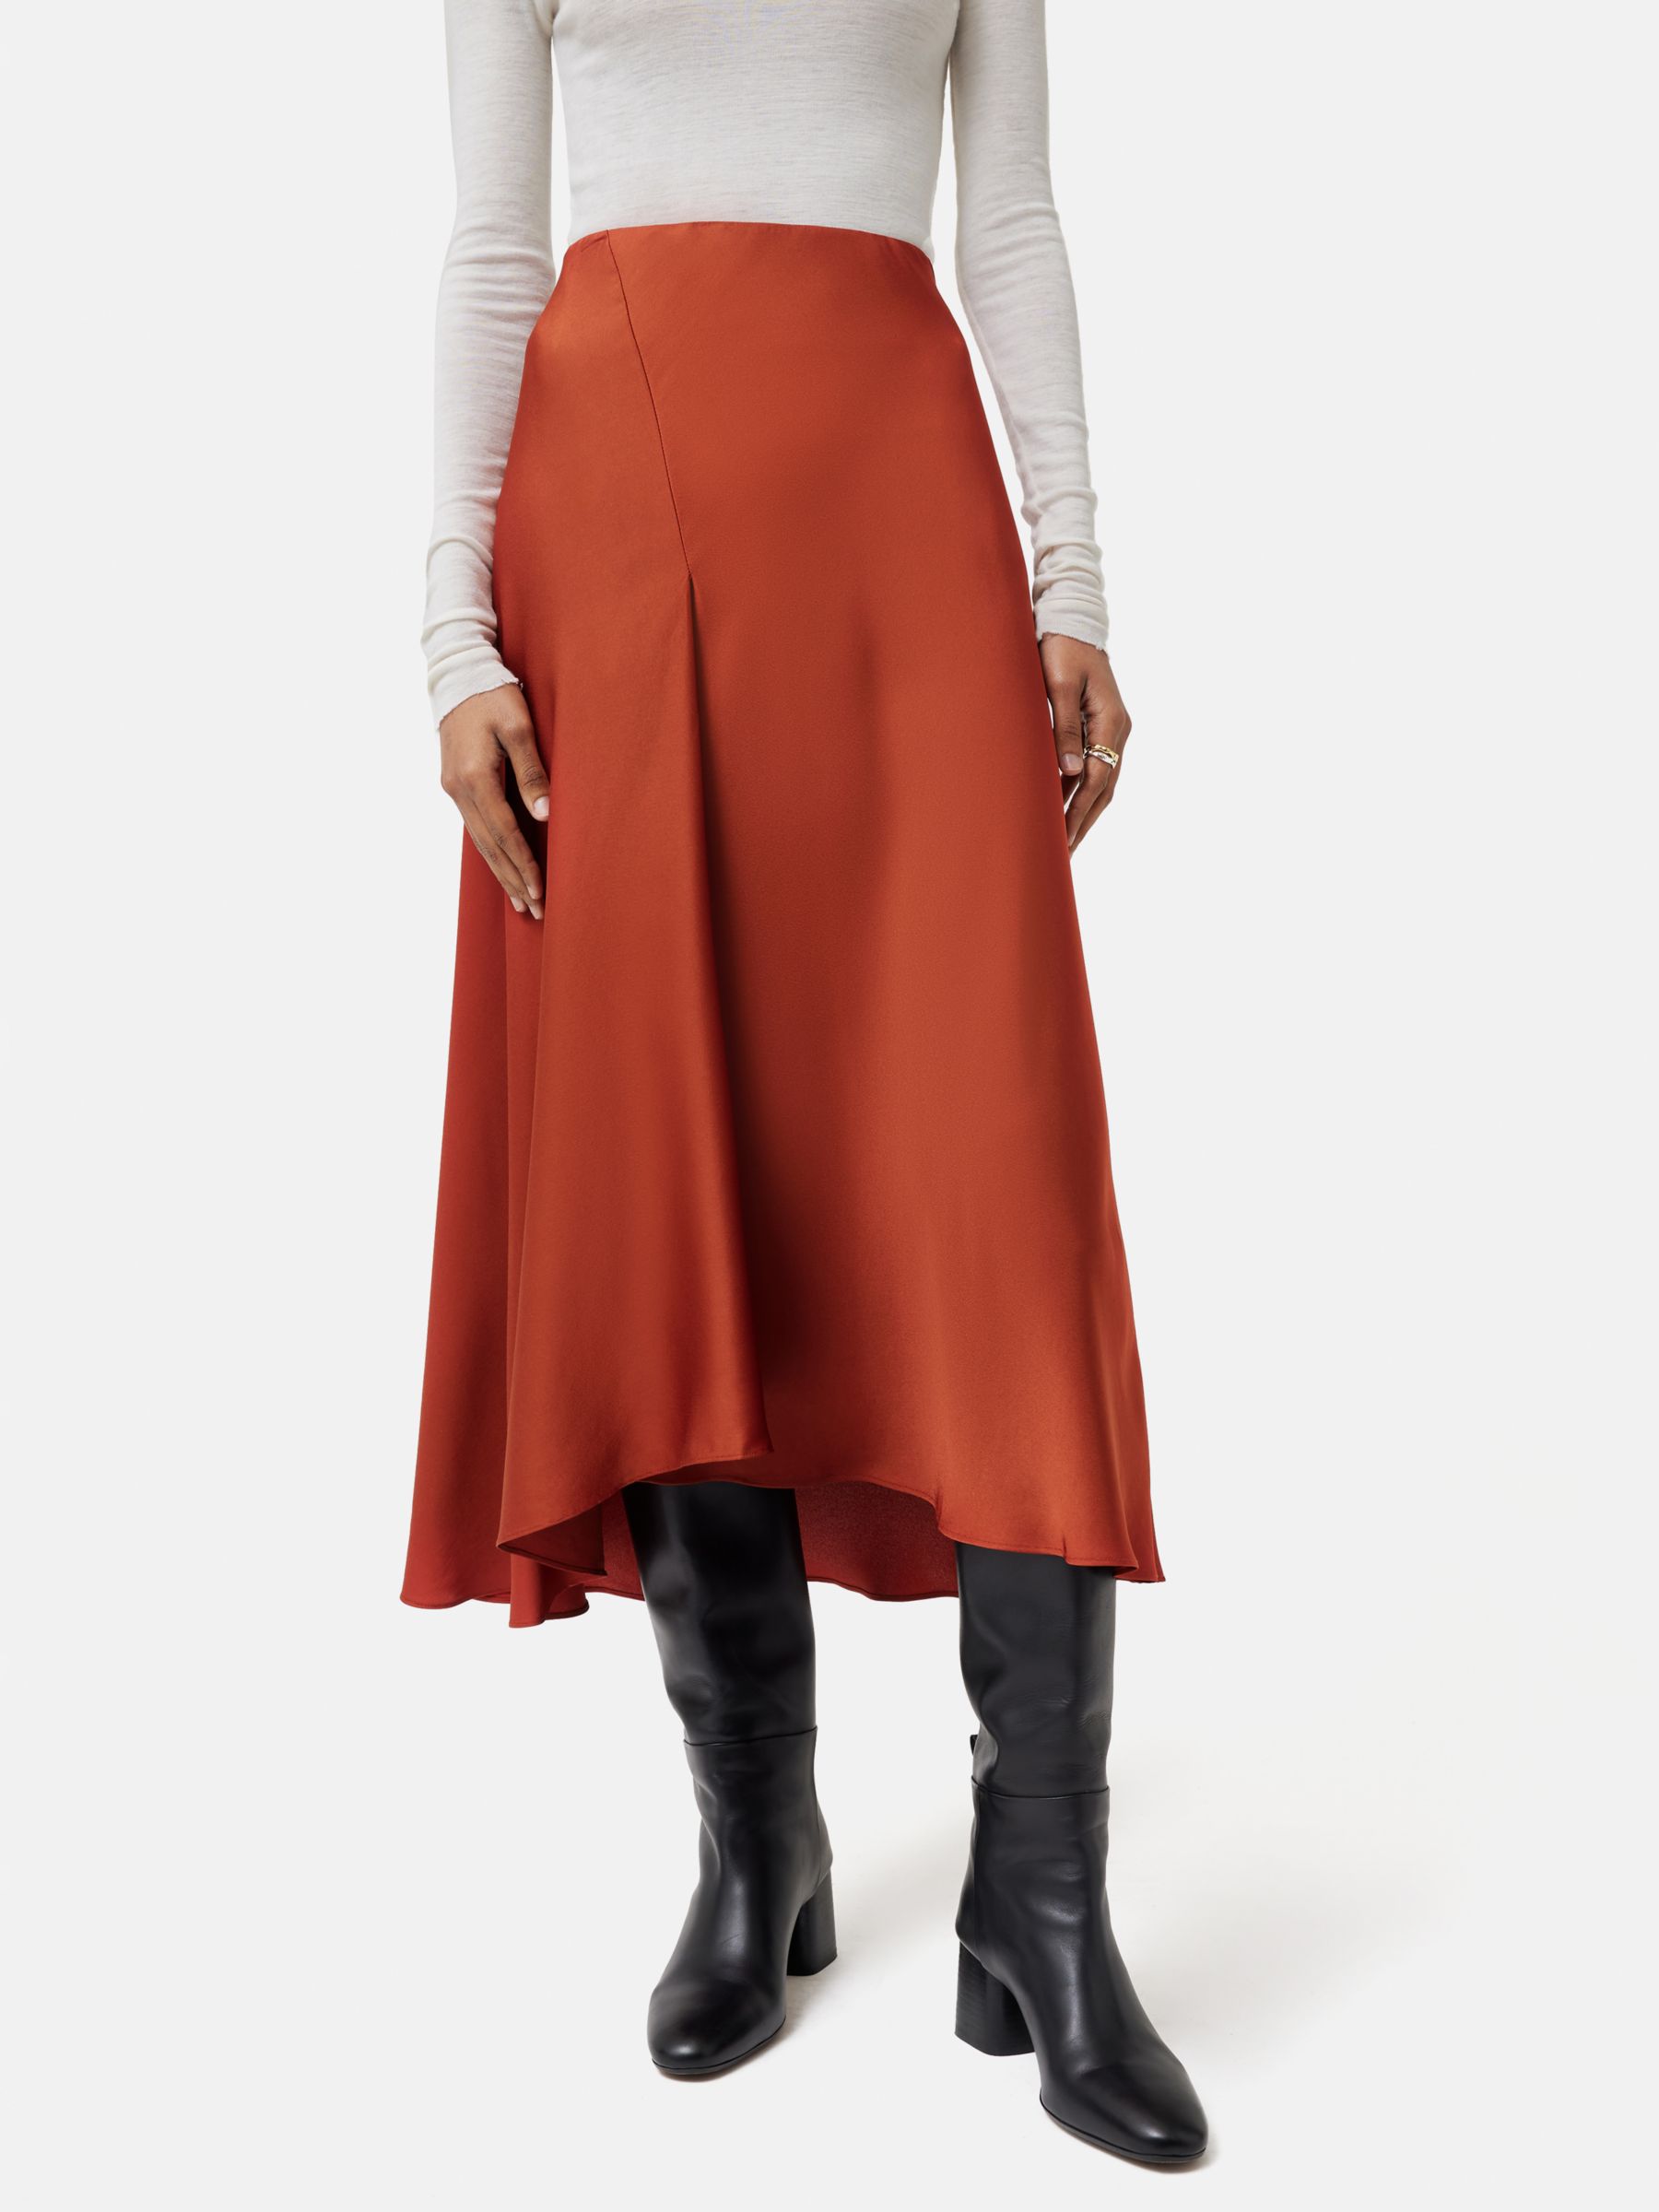 Women's Orange Skirts | John Lewis & Partners